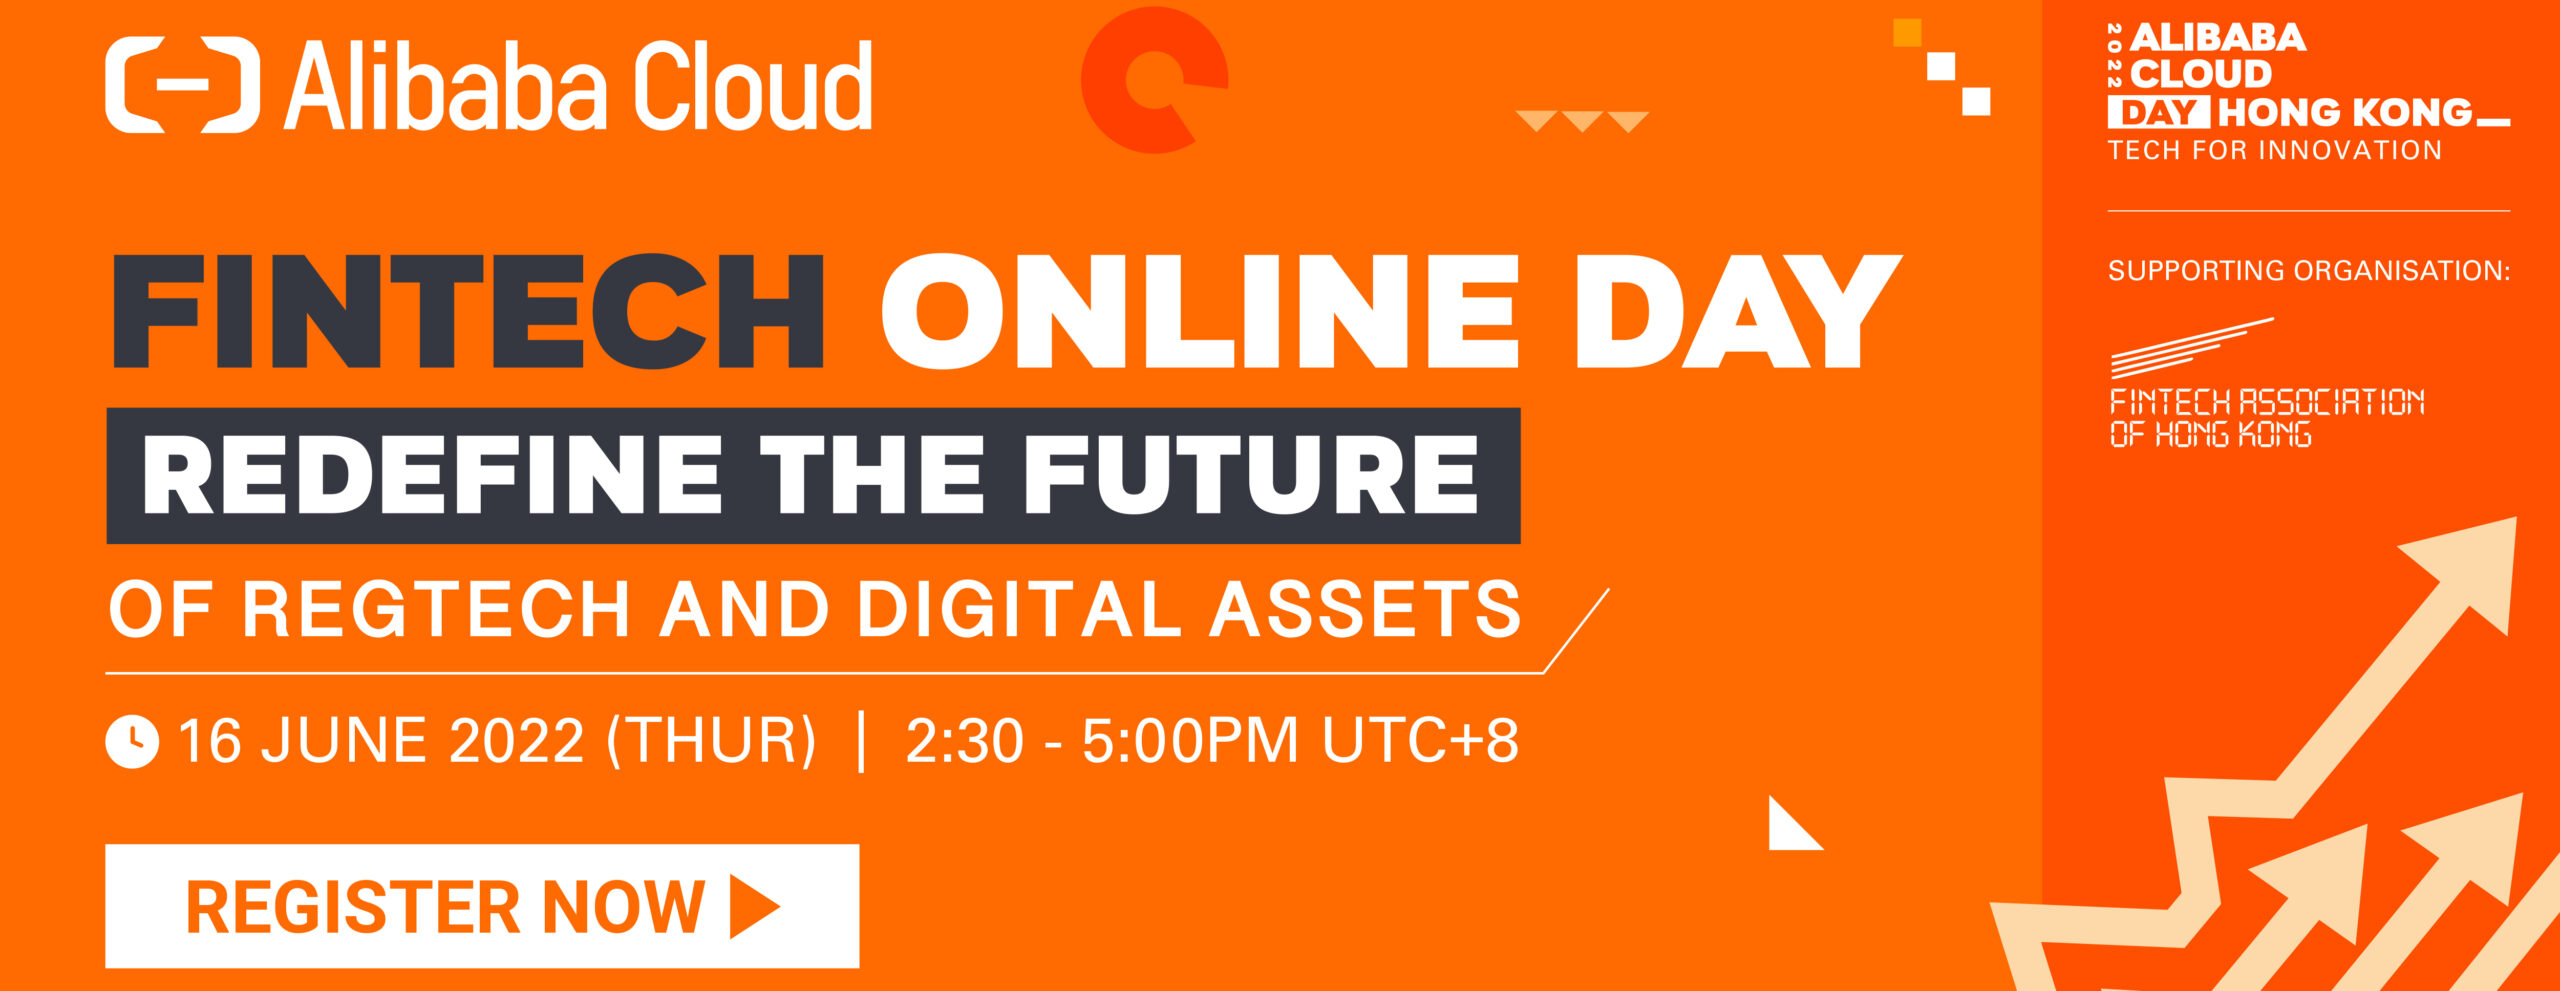 Alibaba Cloud fintech online day